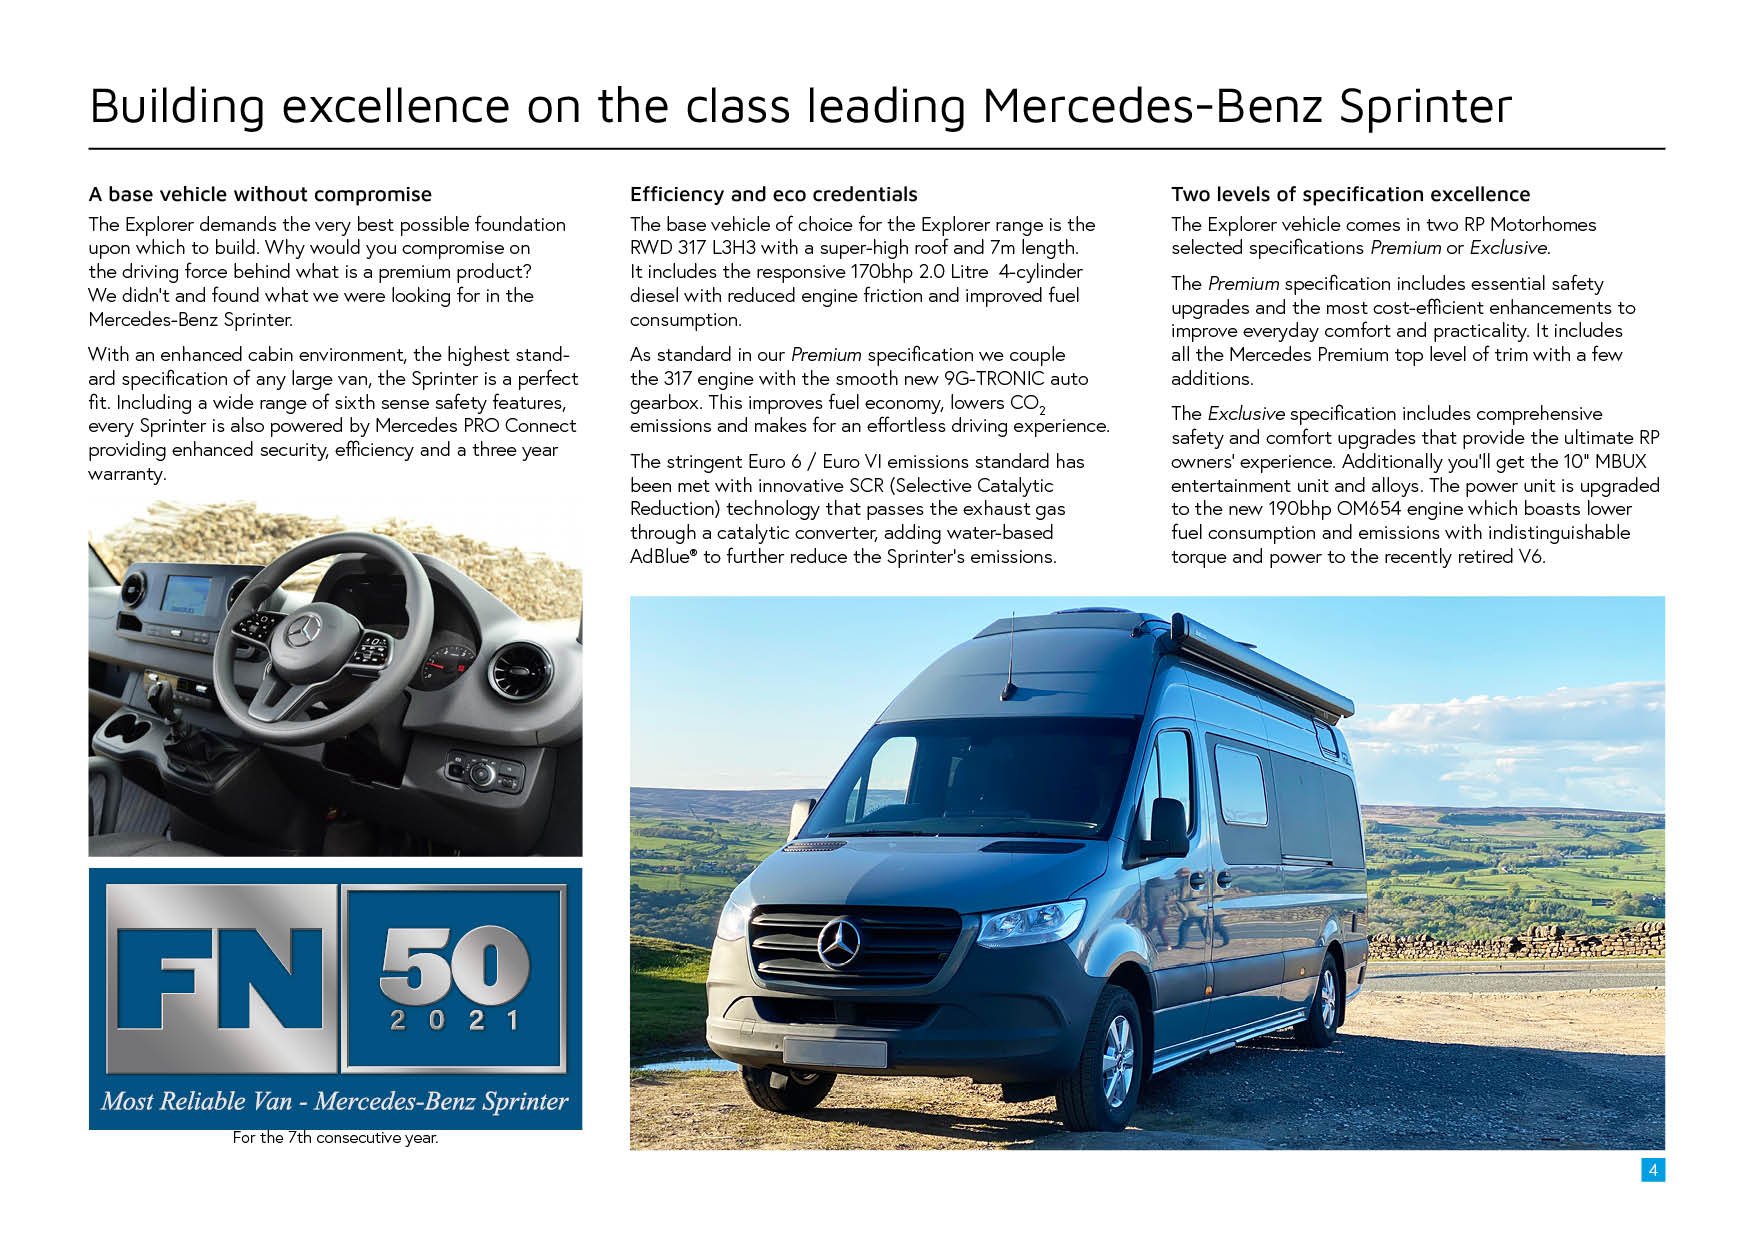 2020 Mercedes-Benz Sprinter Interior Features & Dimensions